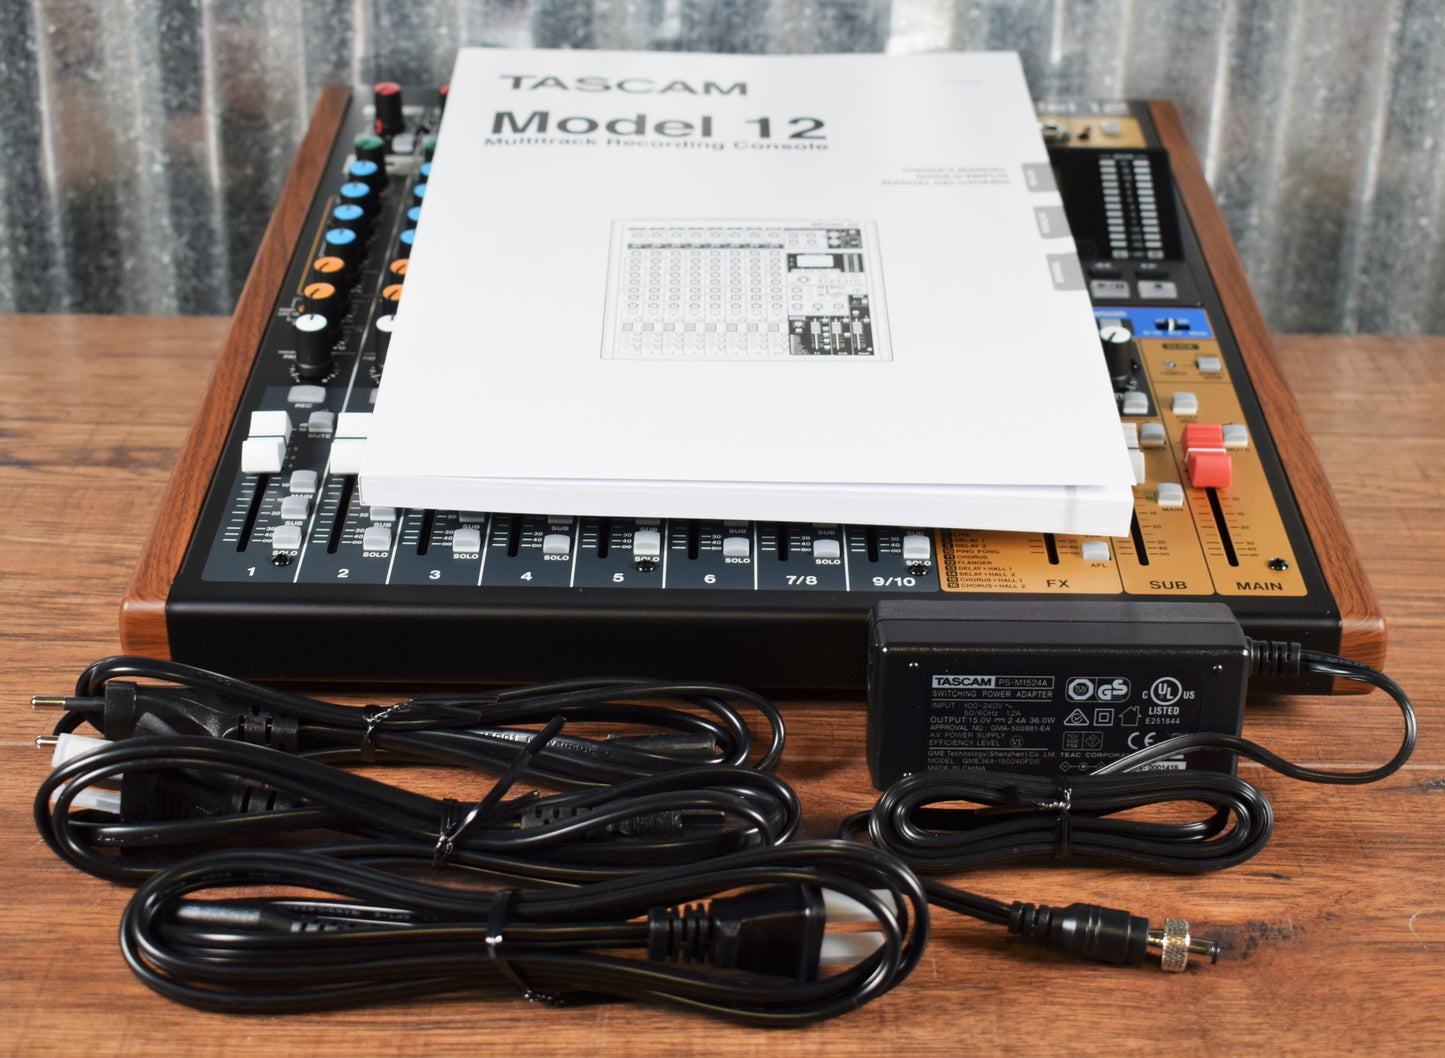 Tascam Model 12 Mixer USB Audio Interface Recorder Controller